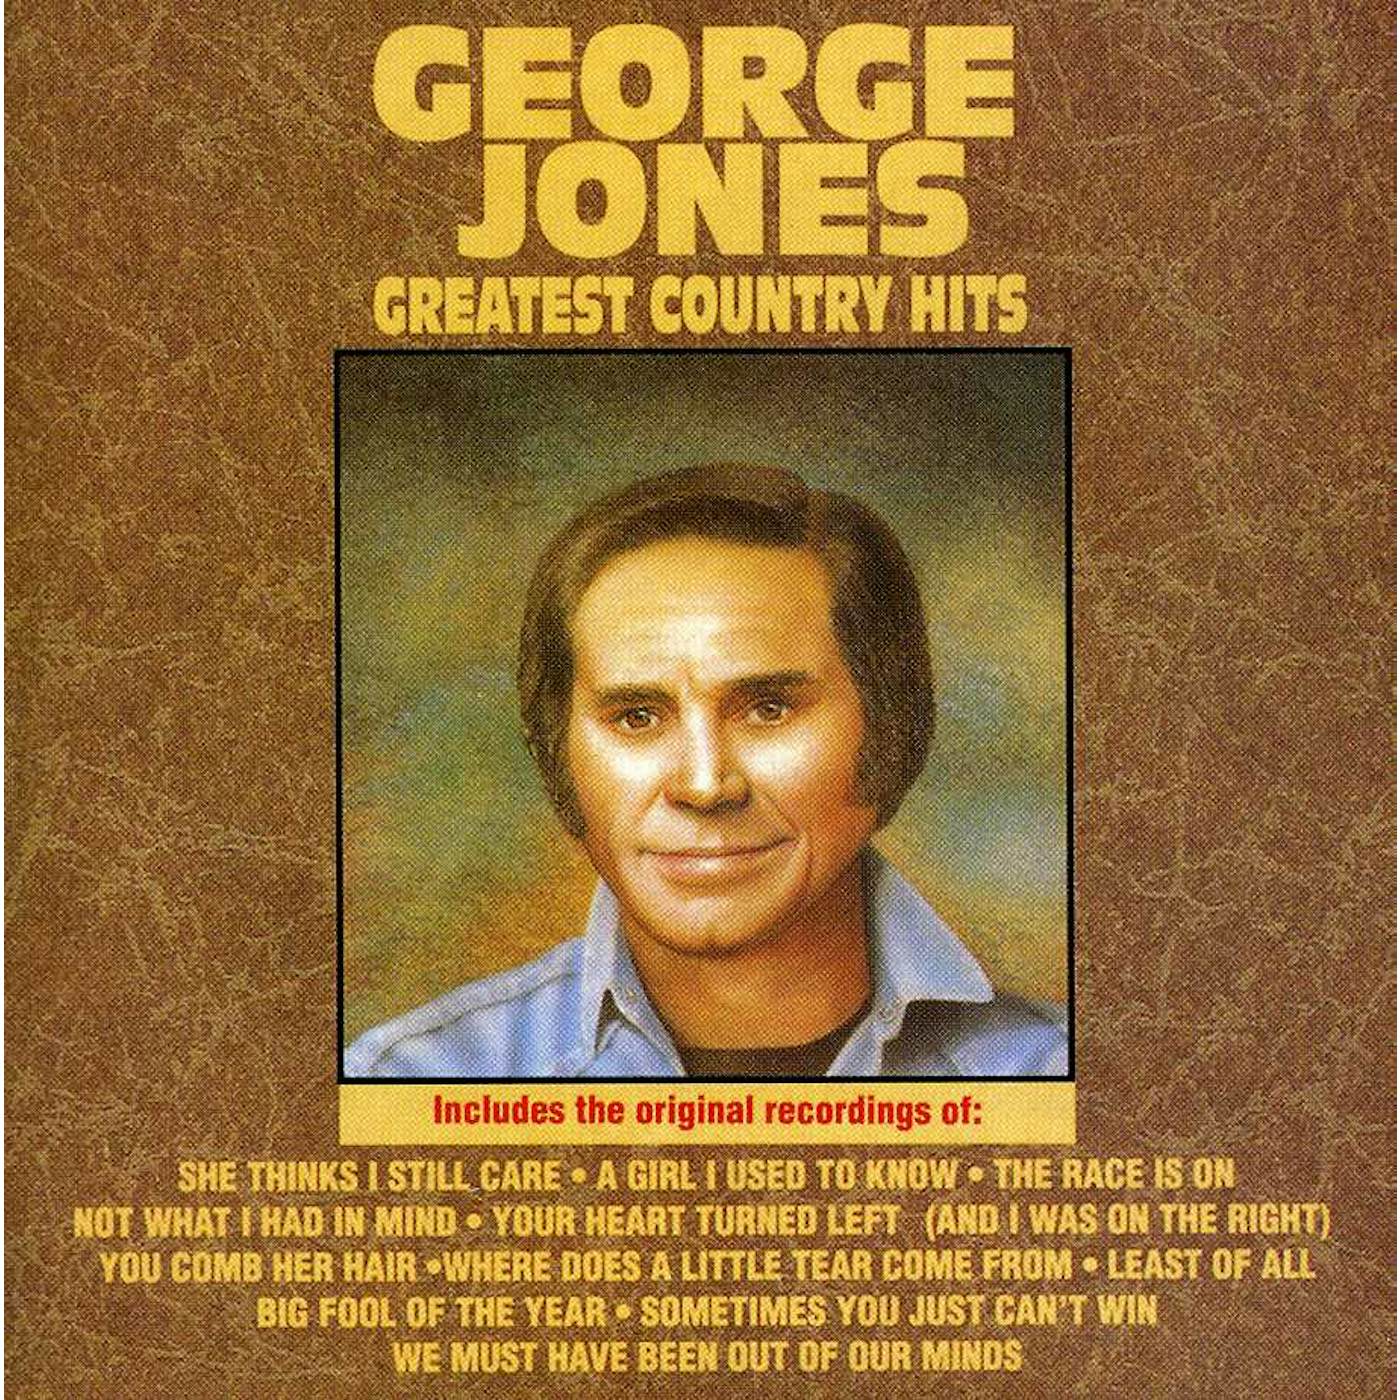 George Jones GREATEST COUNTRY HITS CD